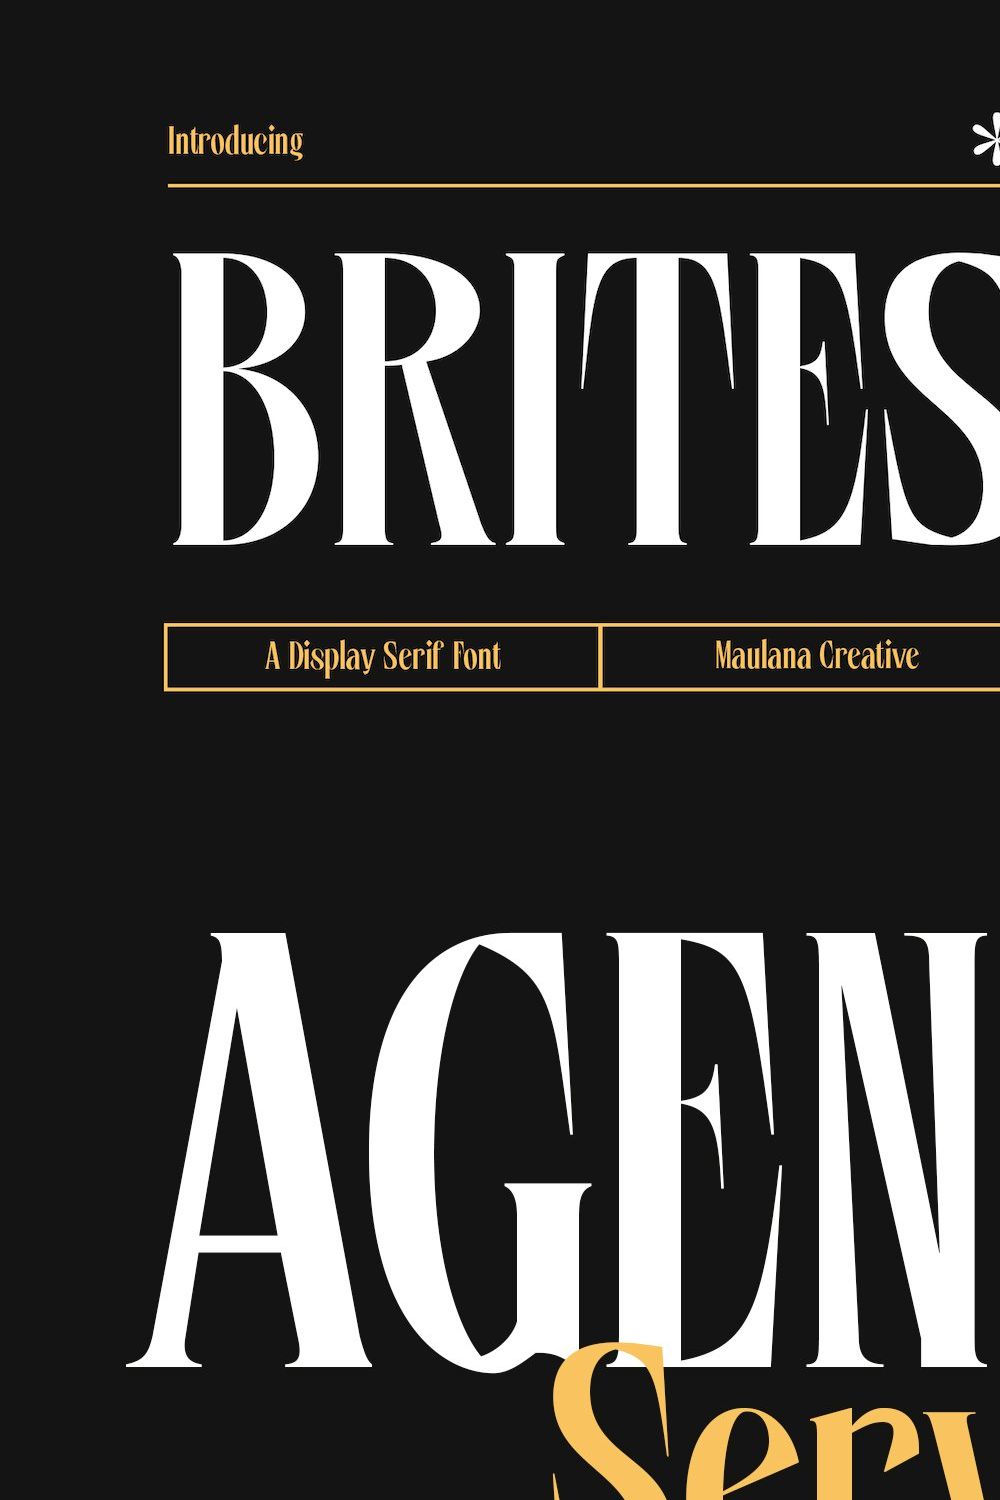 Brites Display Serif Font pinterest preview image.